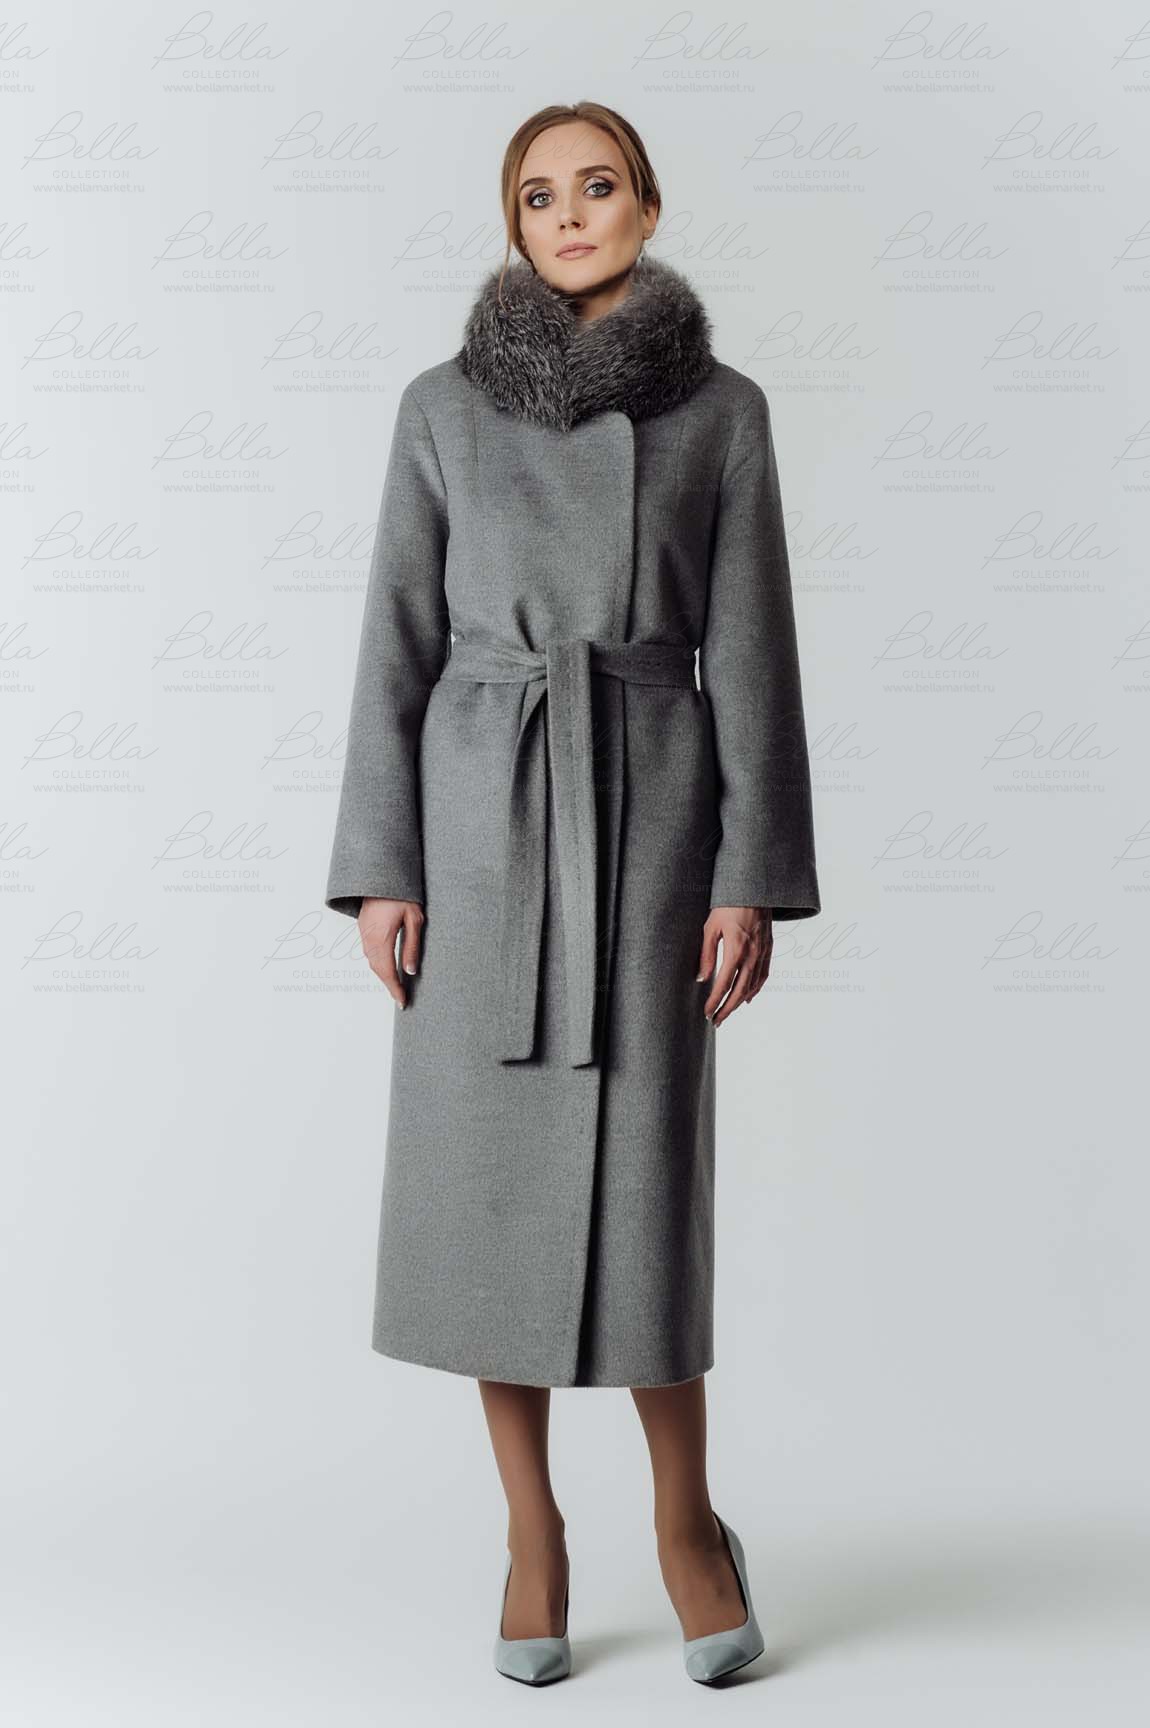 Bella collection пальто. Пальто Bella м17-521. Ninel пальто Bella collection. Пальто collection.